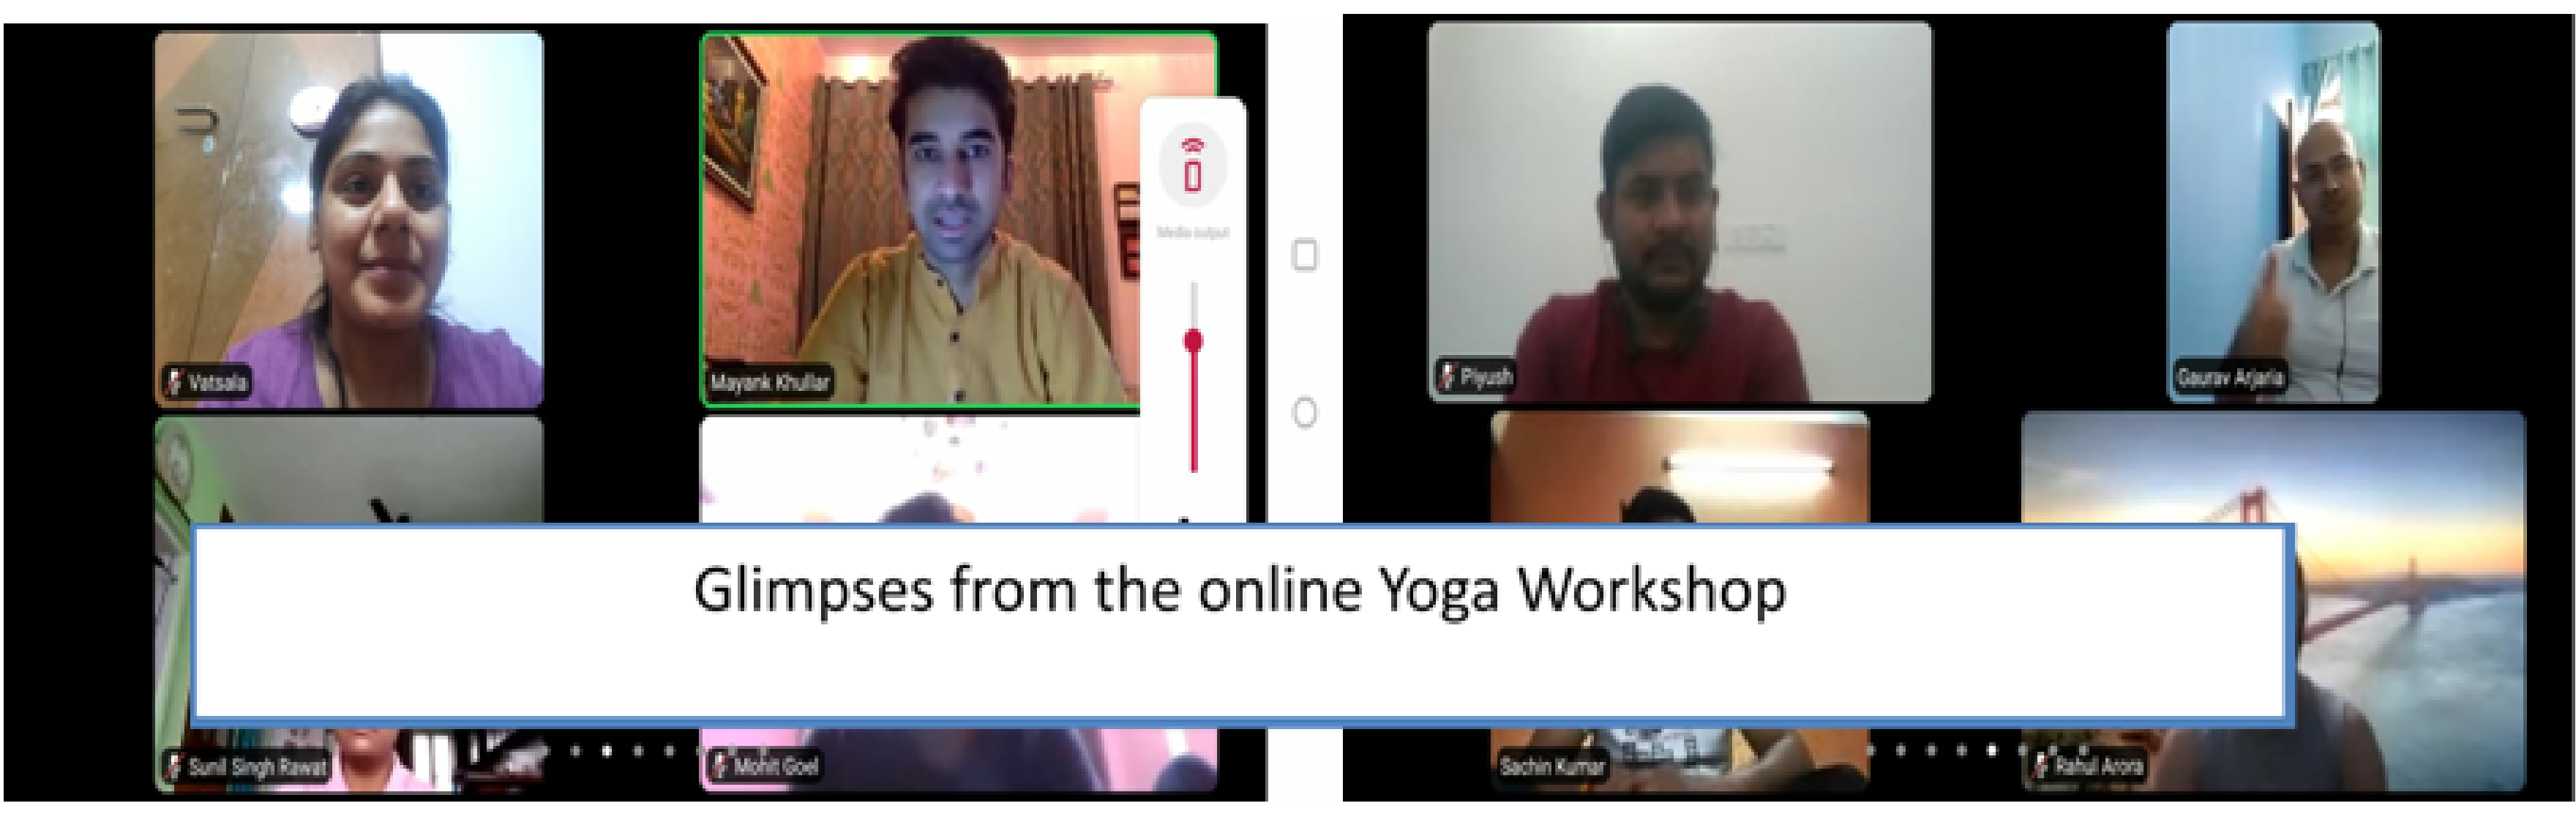 SECI organizes Online Yoga Workshop for Employees